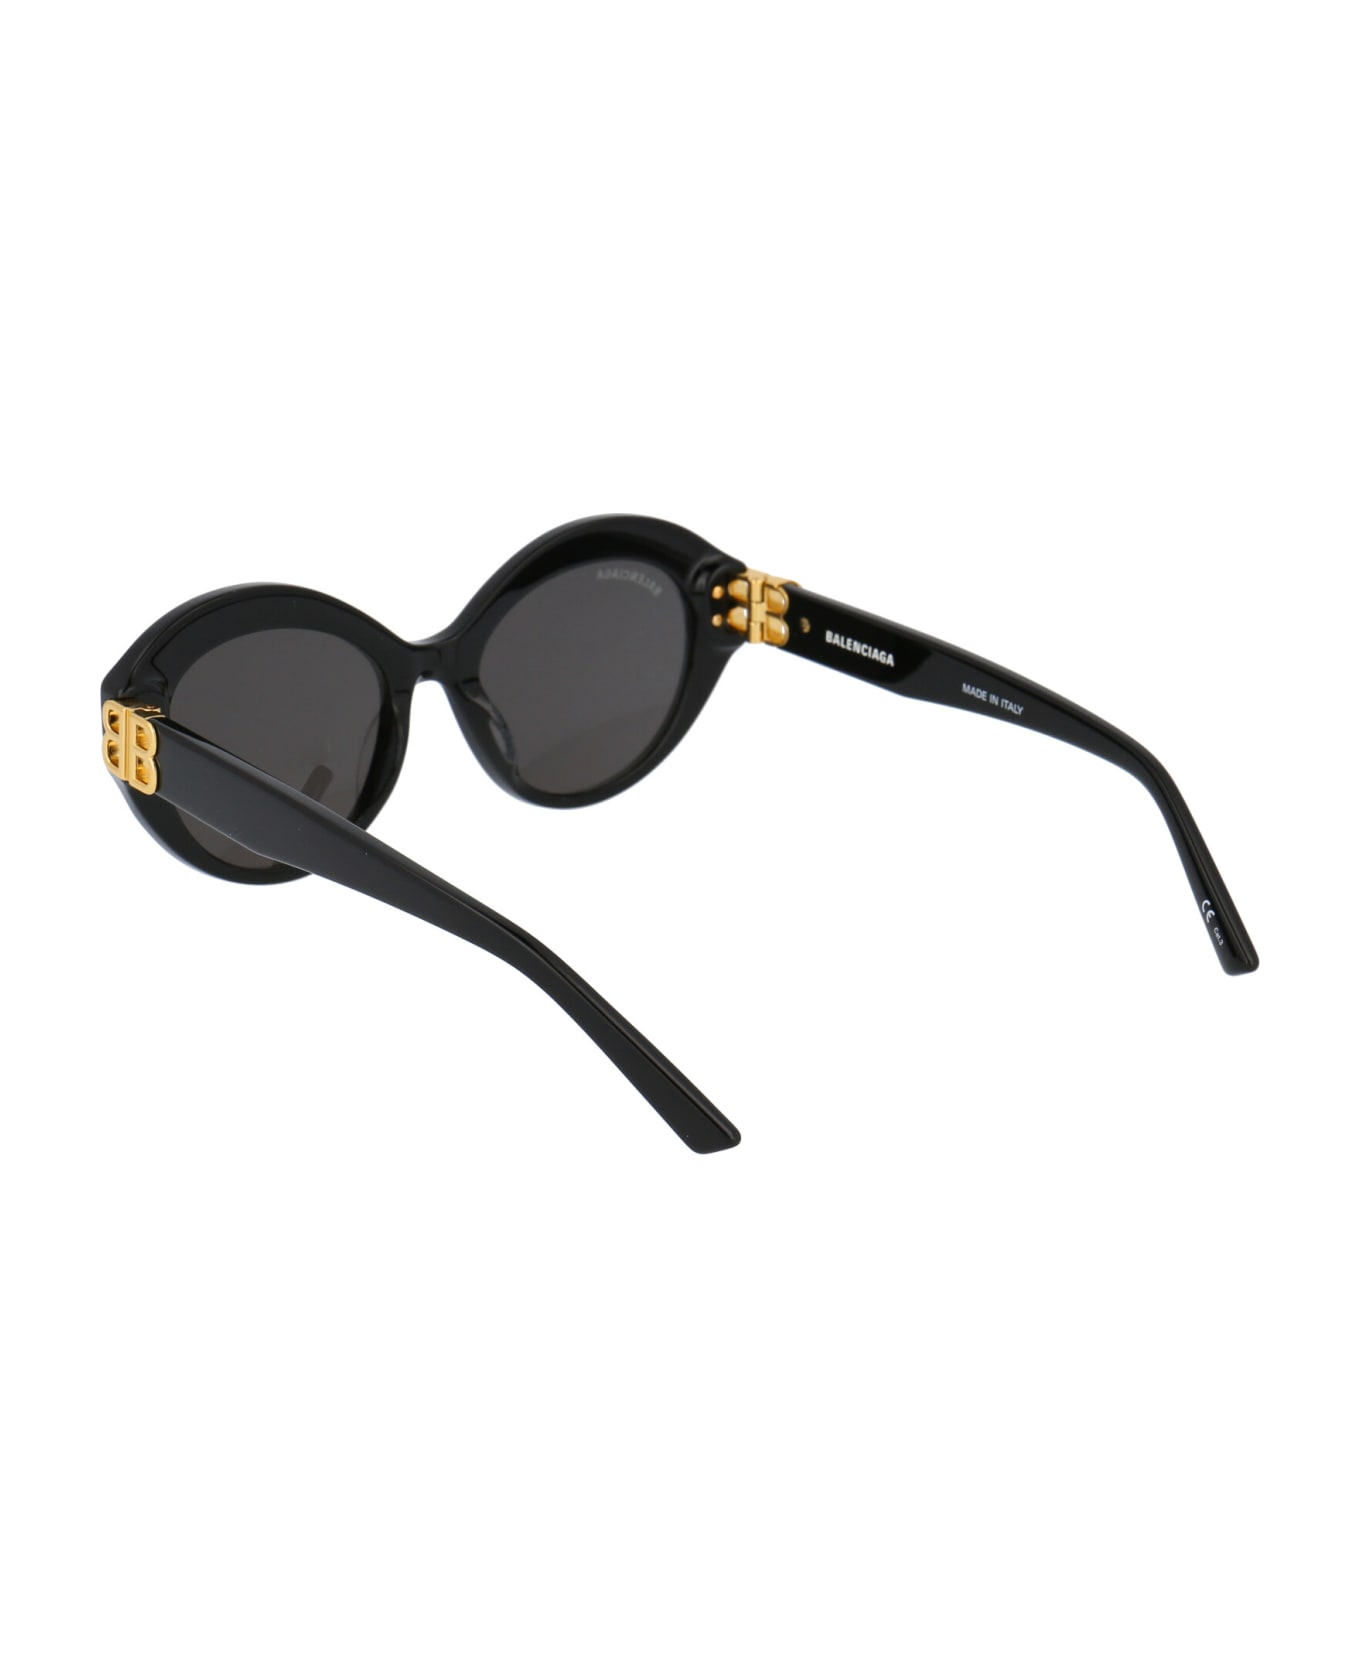 Balenciaga Eyewear Bb0133s Sunglasses - 001 BLACK GOLD GREY